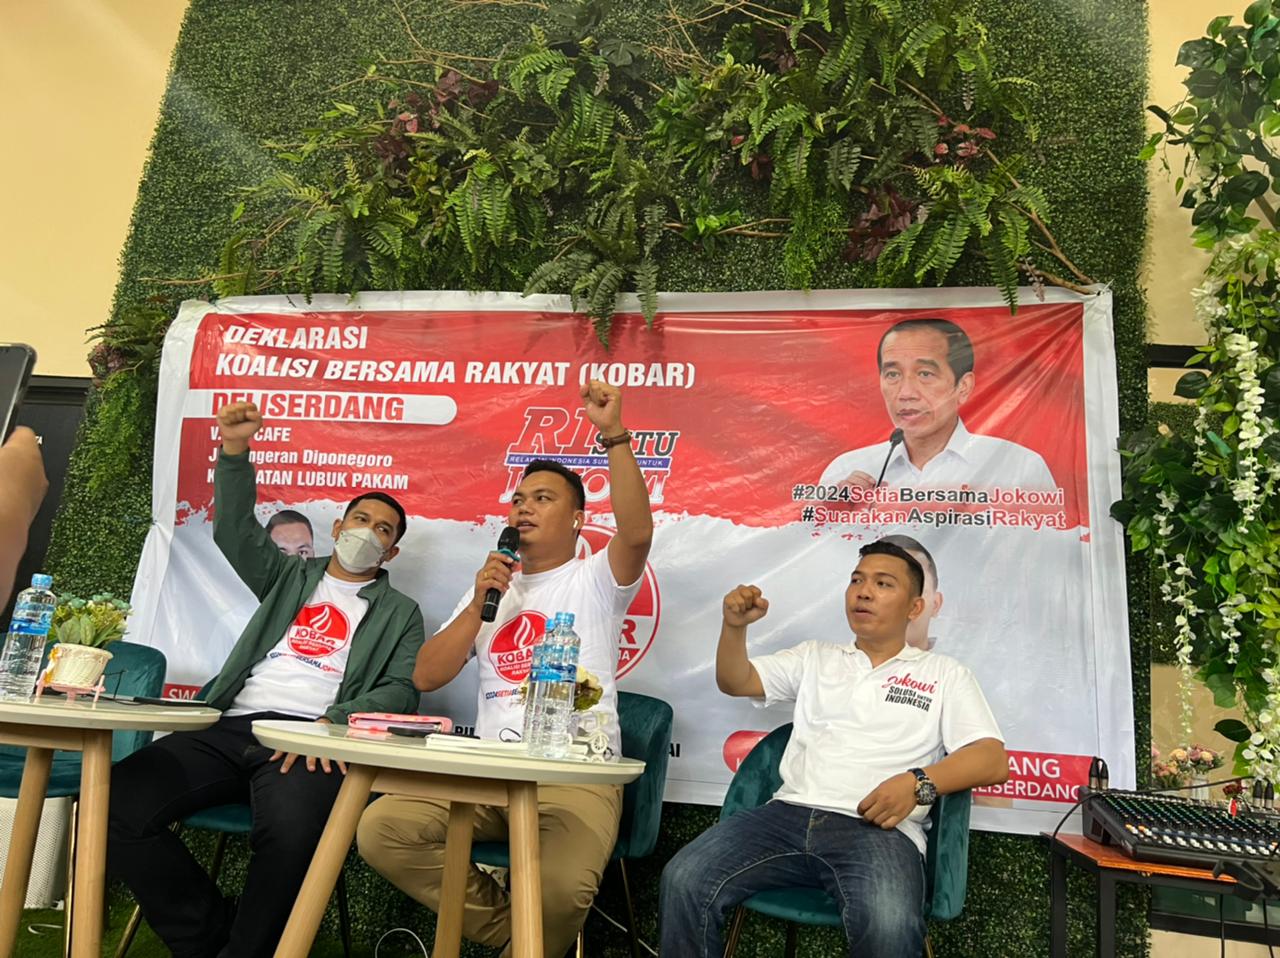 KOBAR: Aspirasi Rakyat Soal Jokowi 3 Periode Tak Langgar Konstitusi